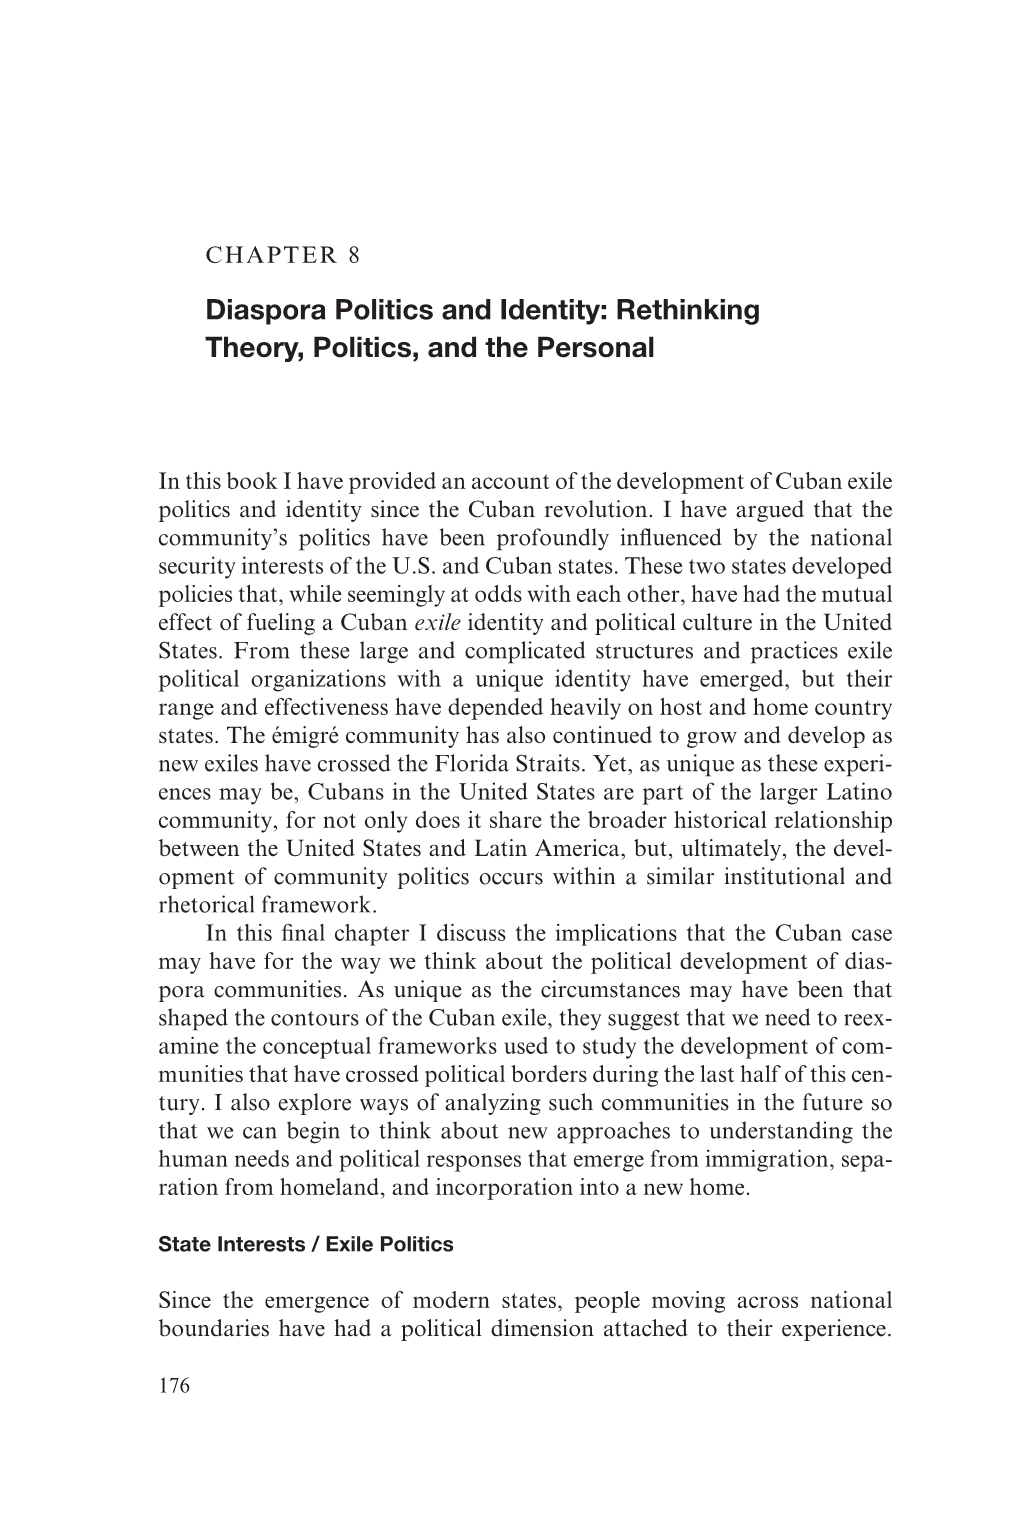 Diaspora Politics and Identity: Rethinking Theory, Politics, and the Personal